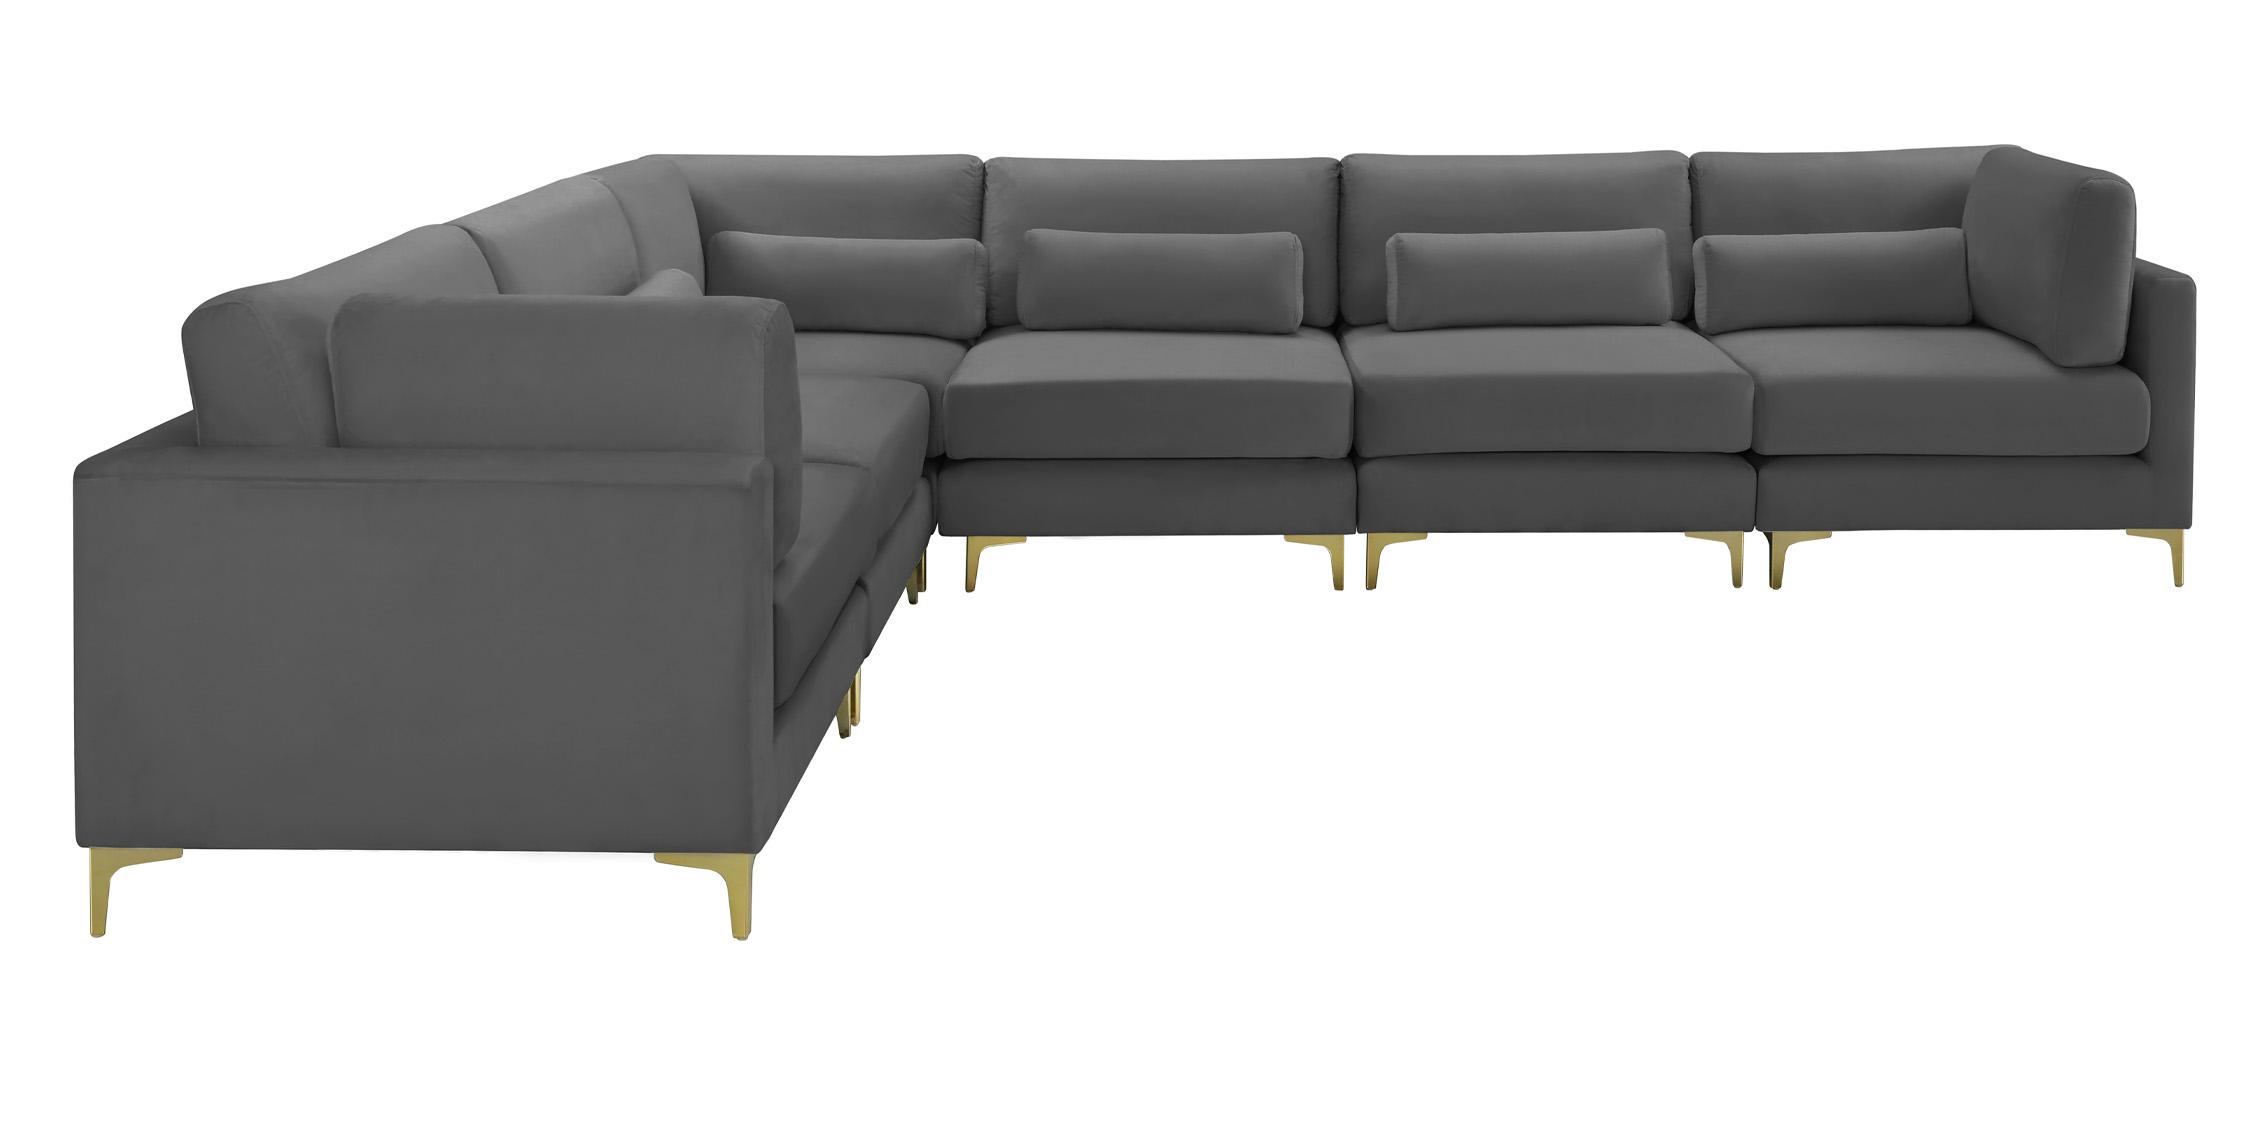 

    
Meridian Furniture JULIA 605Grey-Sec6A Modular Sectional Sofa Gray 605Grey-Sec6A
